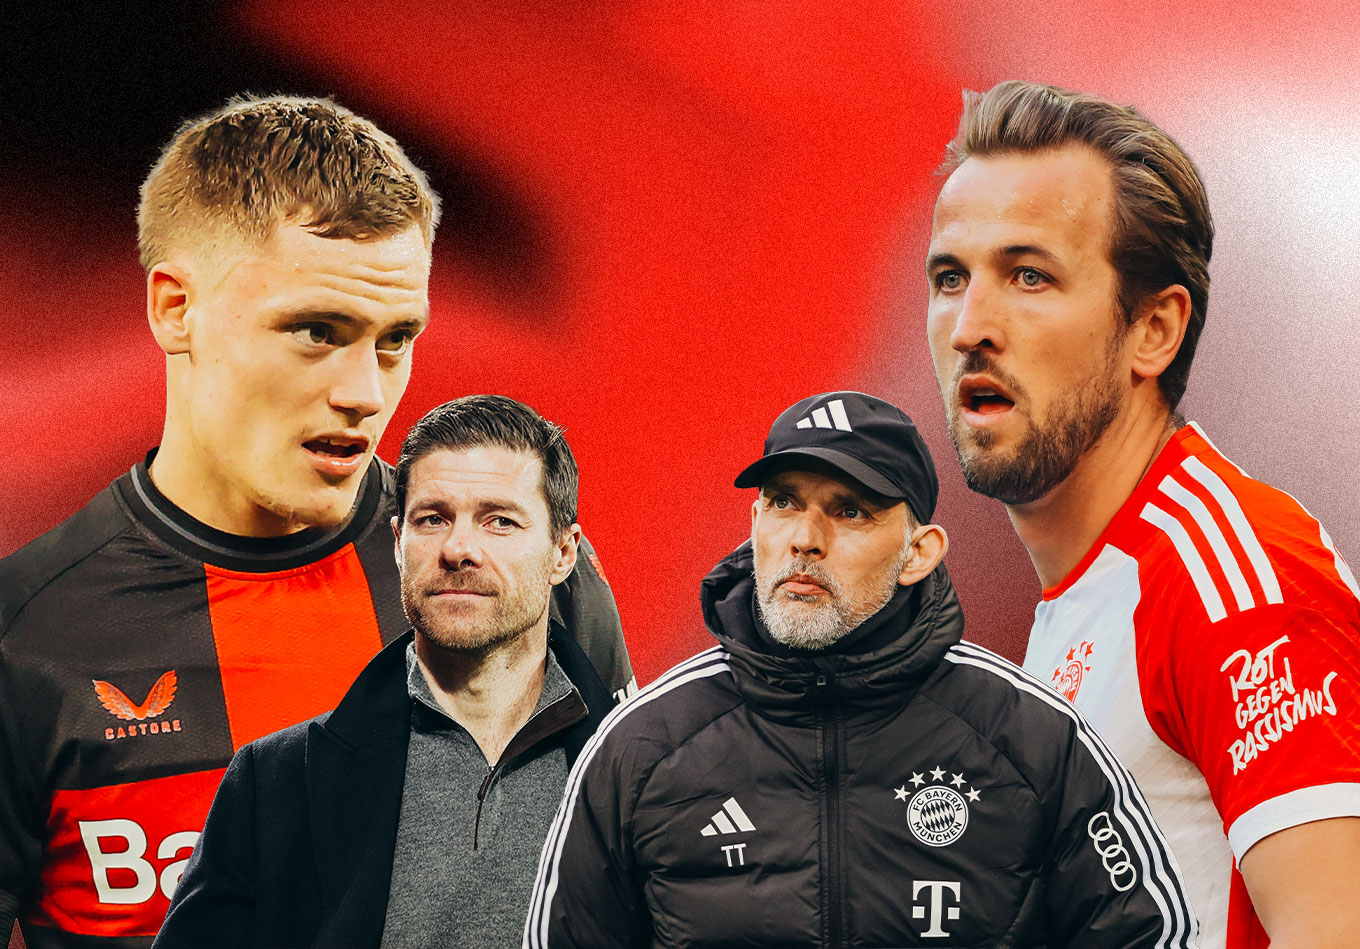 Bayer Leverkusen vs Bayern Munich: Prediction and Preview